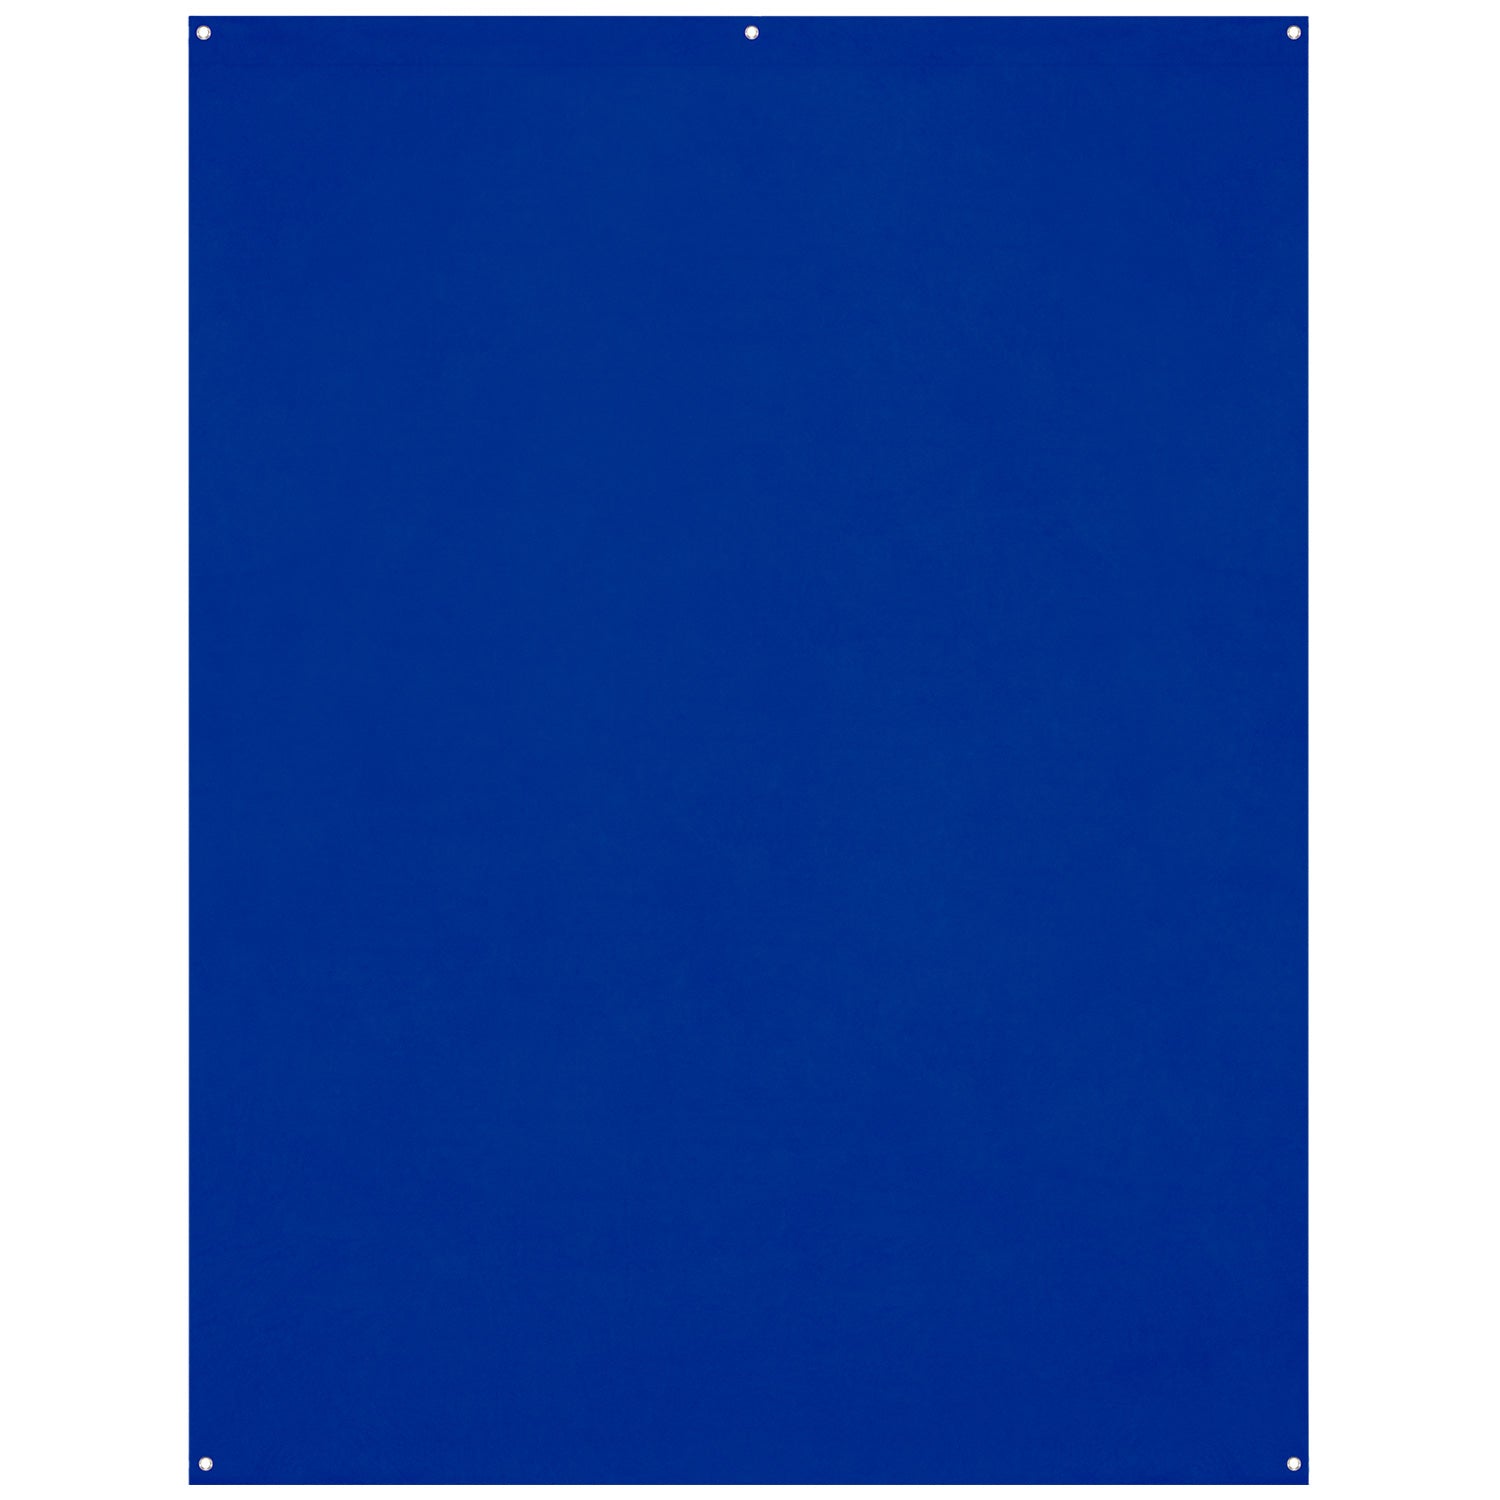 Wrinkle-Resistant Backdrop - Royal Blue / Chroma-Key Blue (5' x 7')